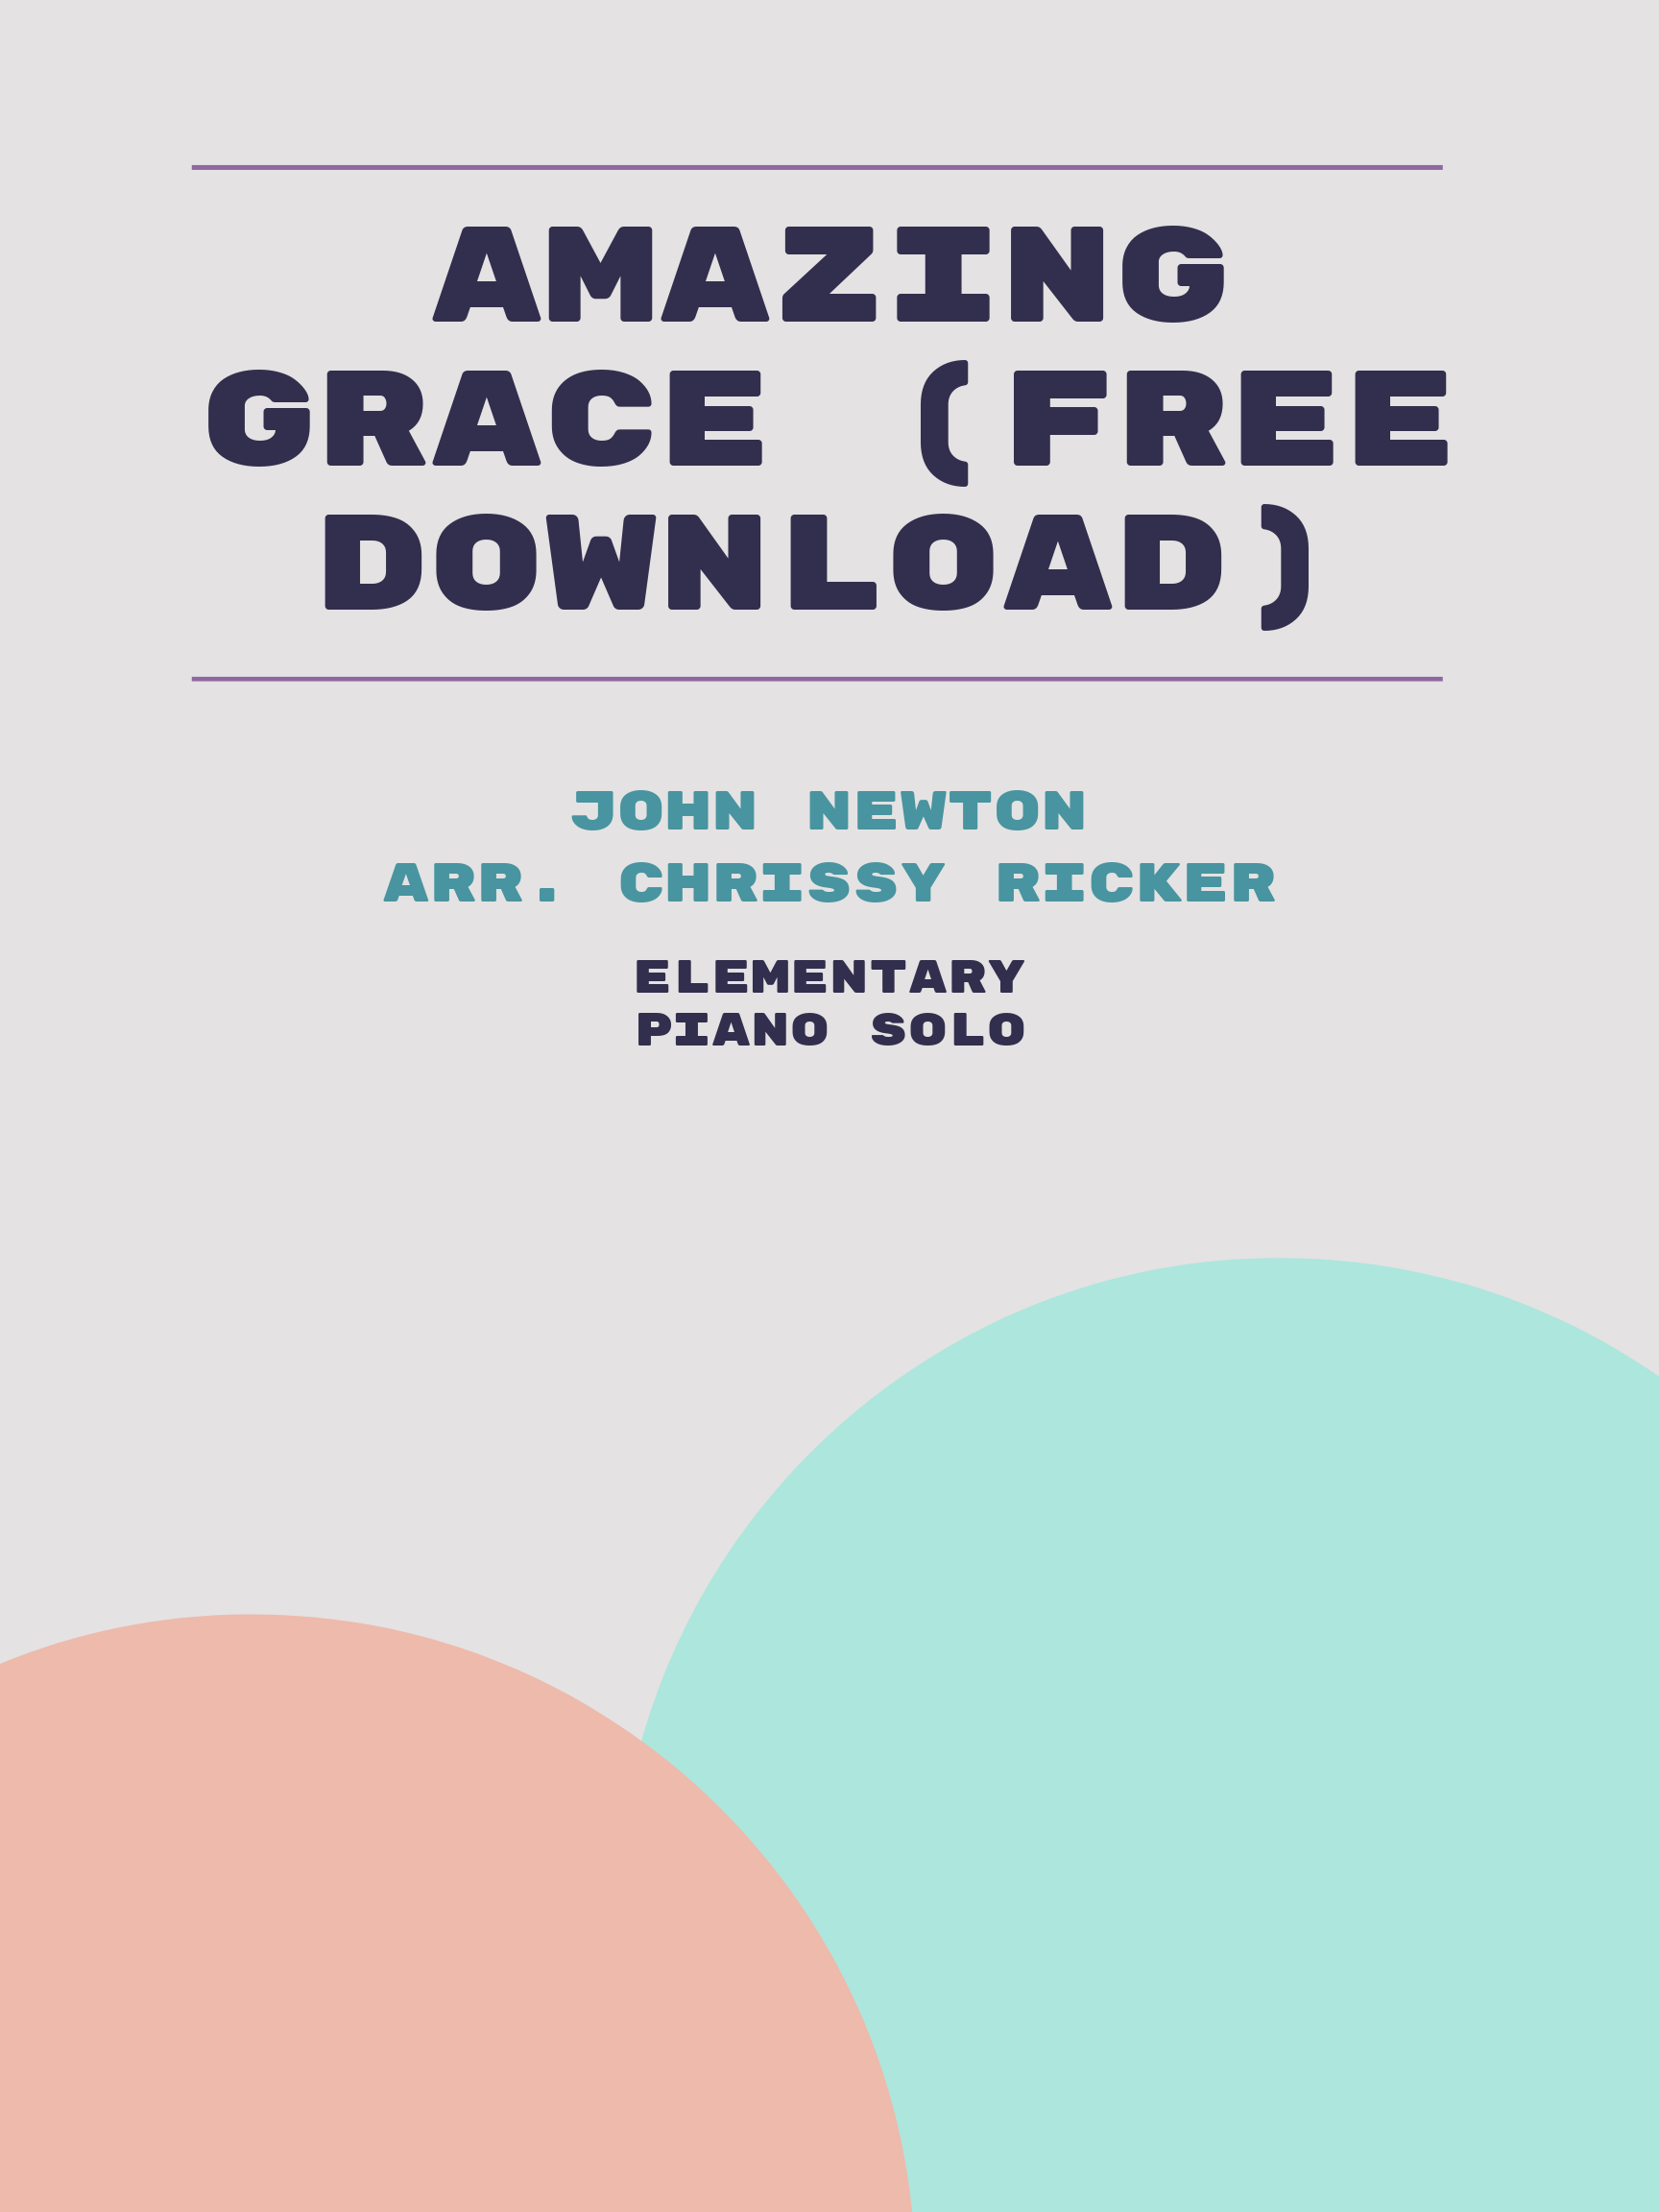 Amazing Grace (free download) by John Newton